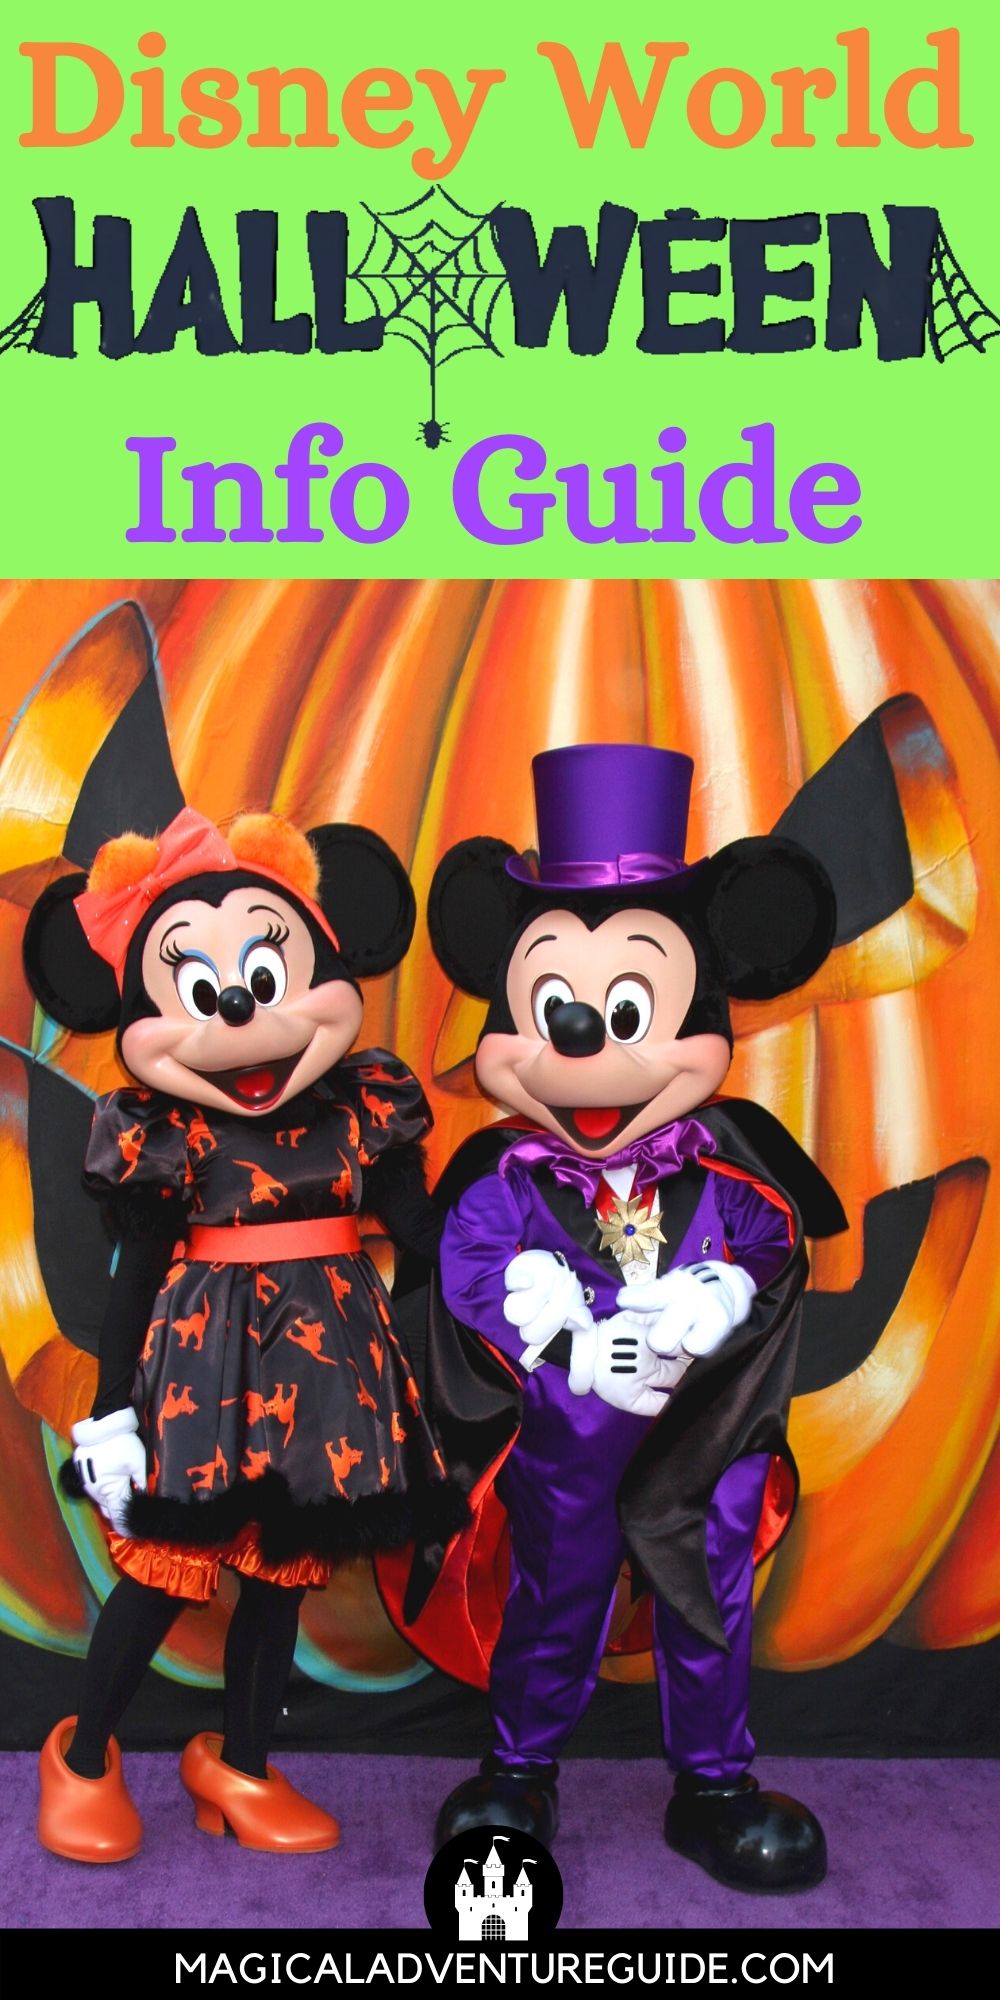 Mickey and Minnie dressed in Halloween attire at Disney World